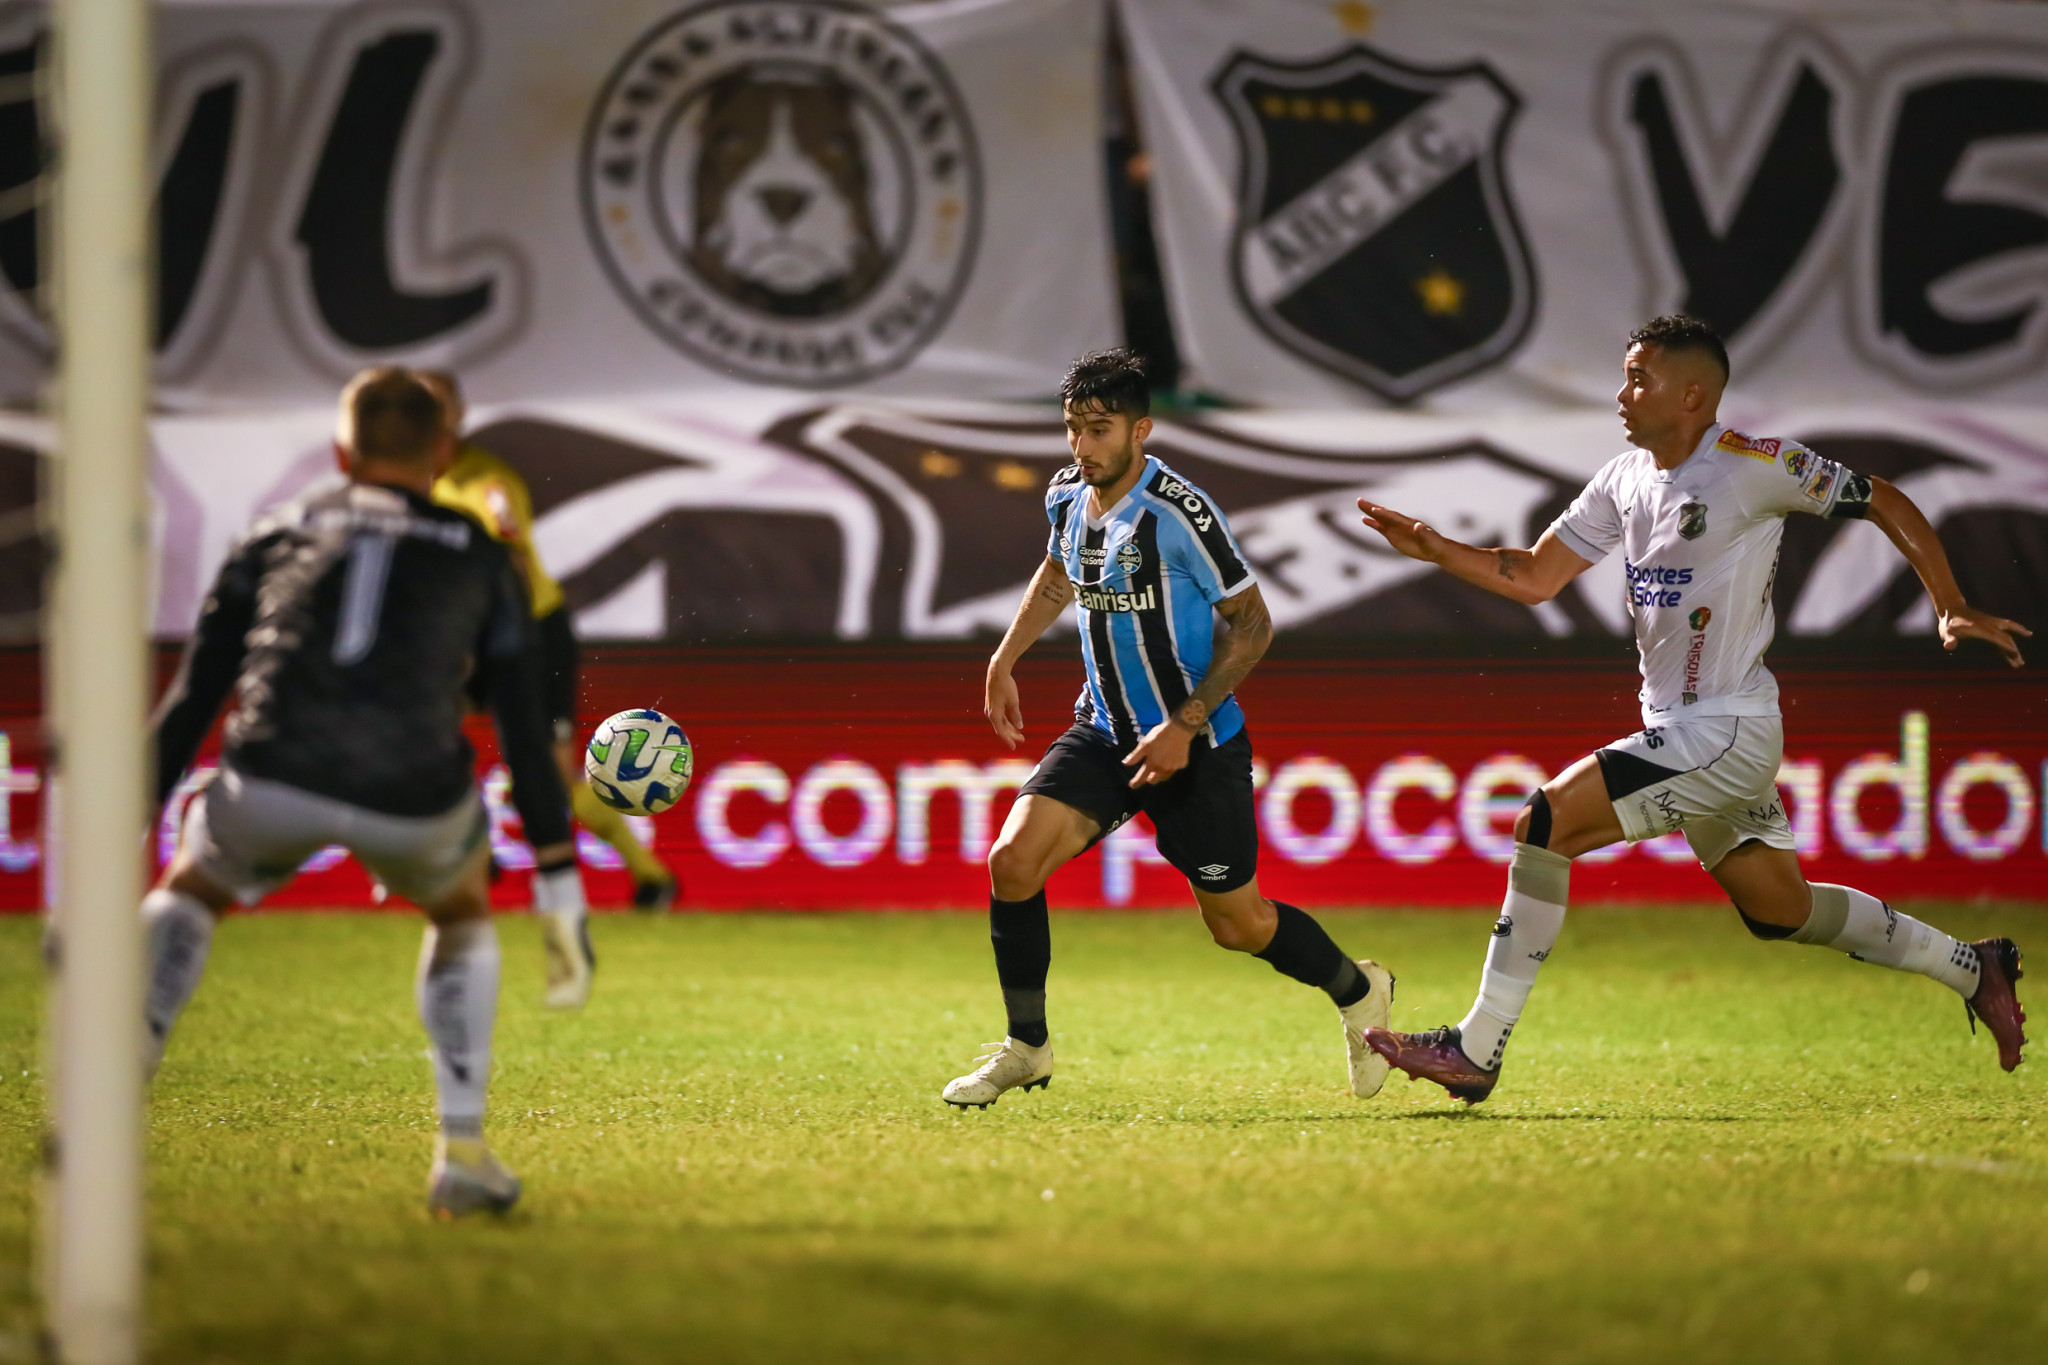 Ceará SC vs Tombense: A Clash of Skills